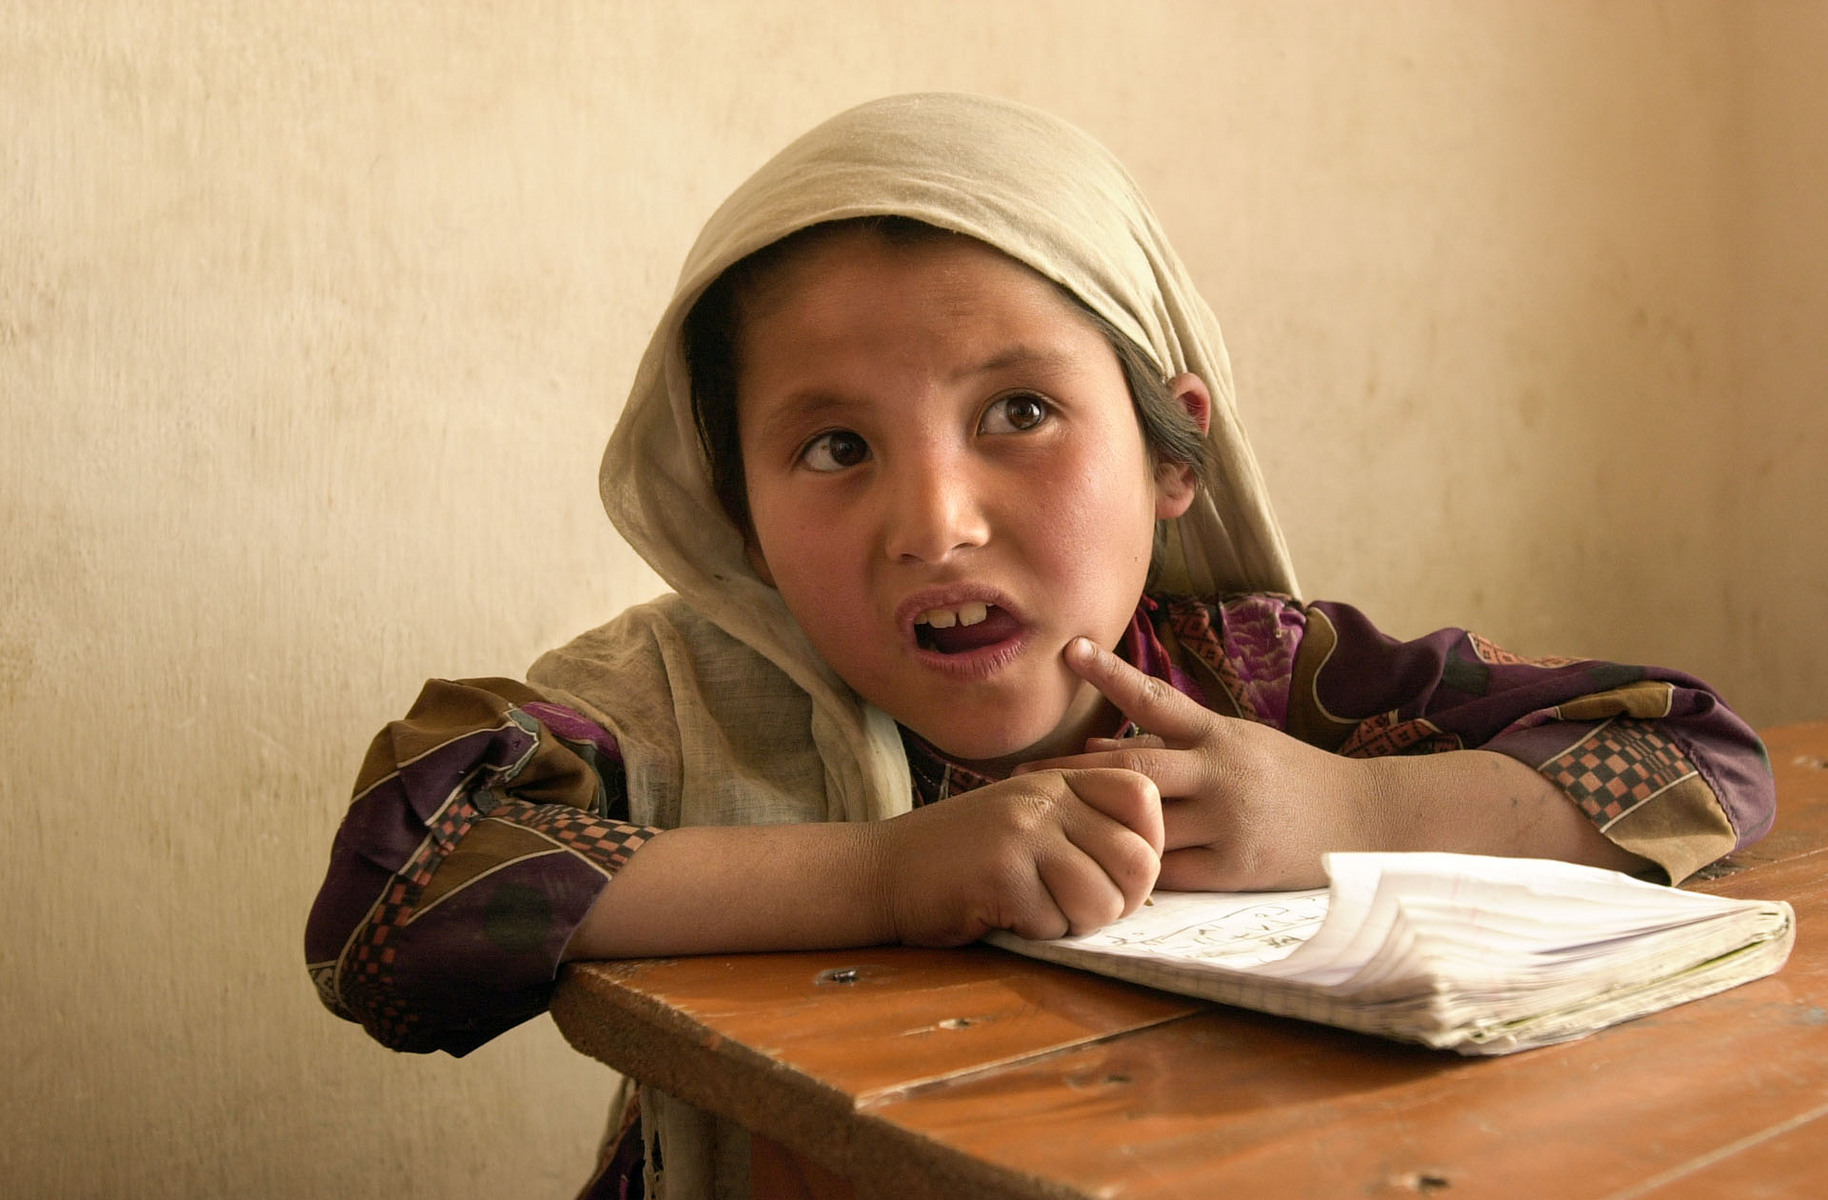  : Afghanistan : Pete Souza Photography